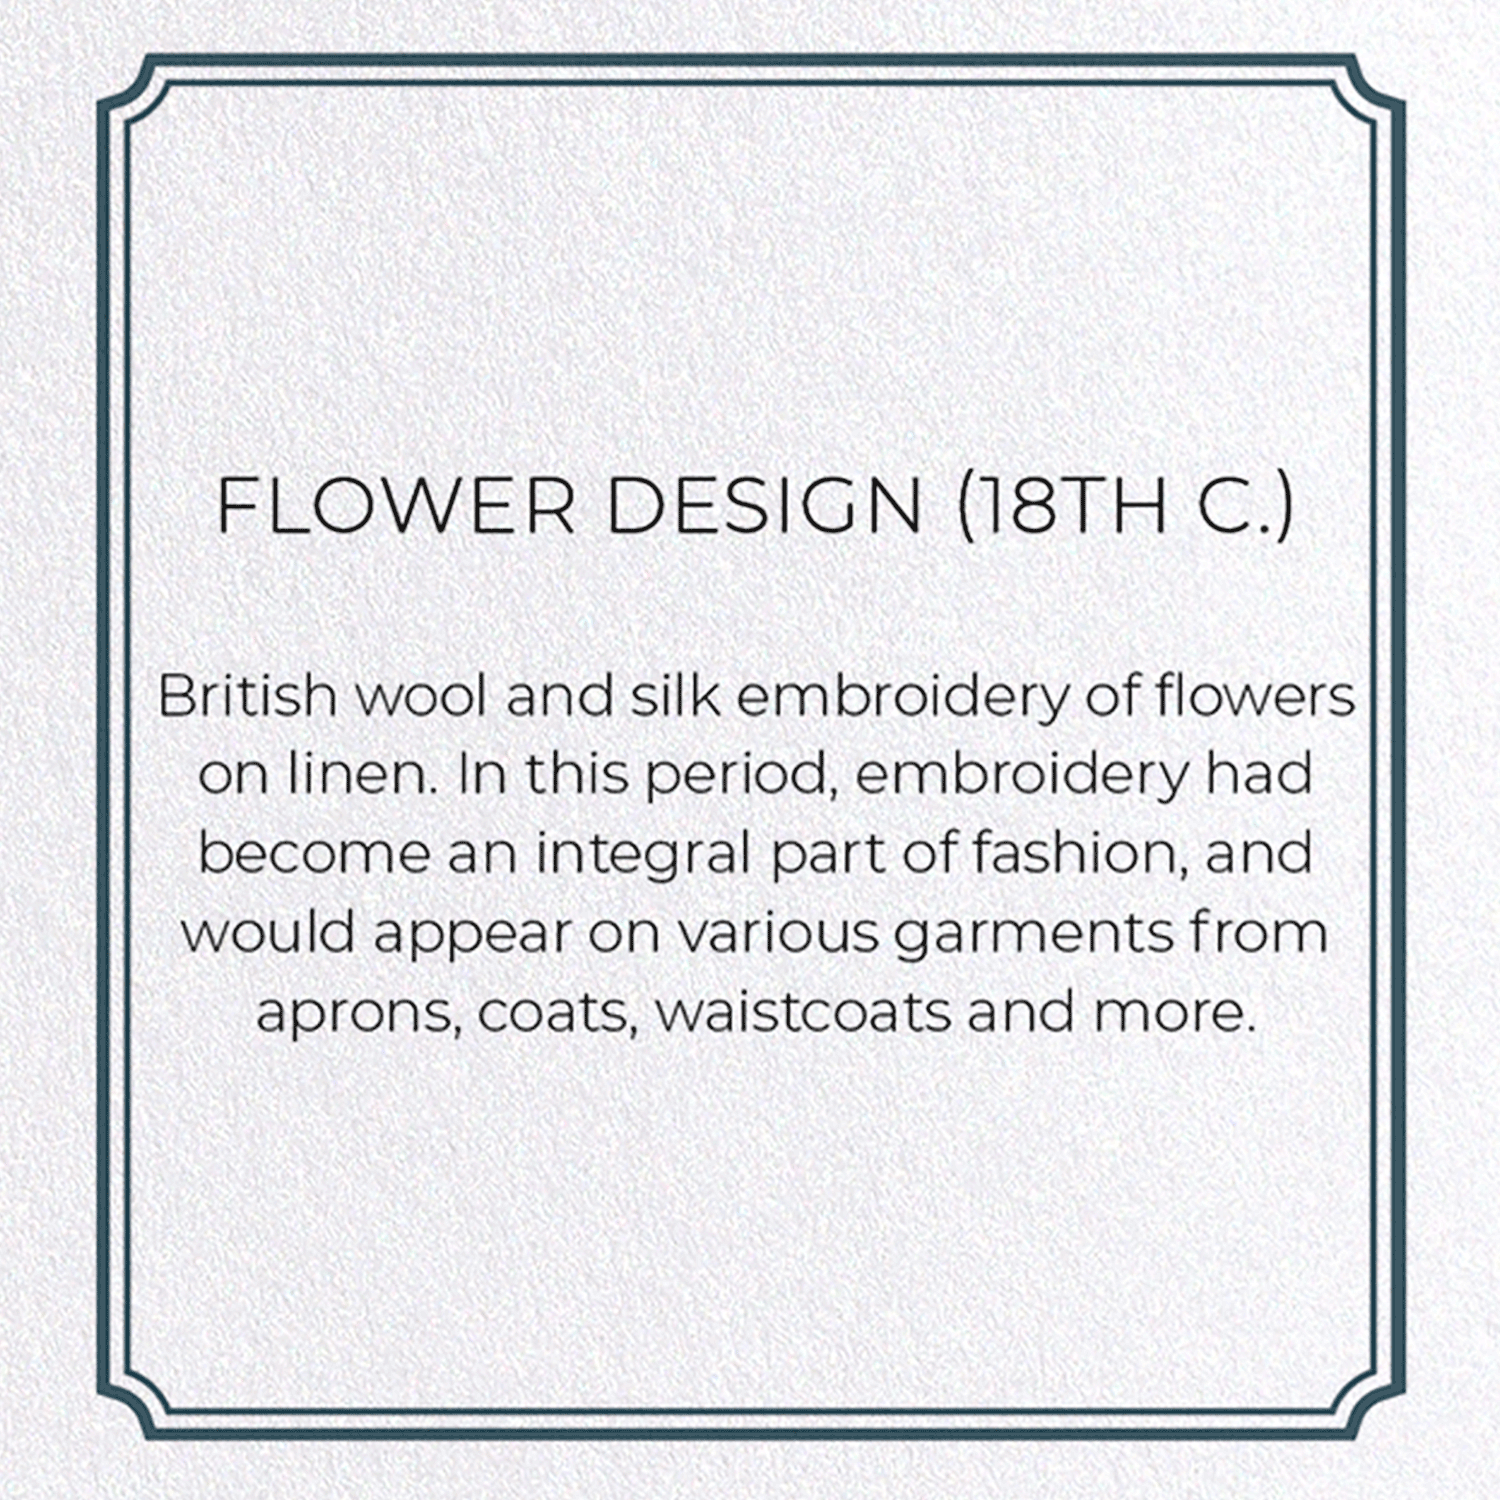 FLOWER DESIGN (18TH C.): Pattern Greeting Card